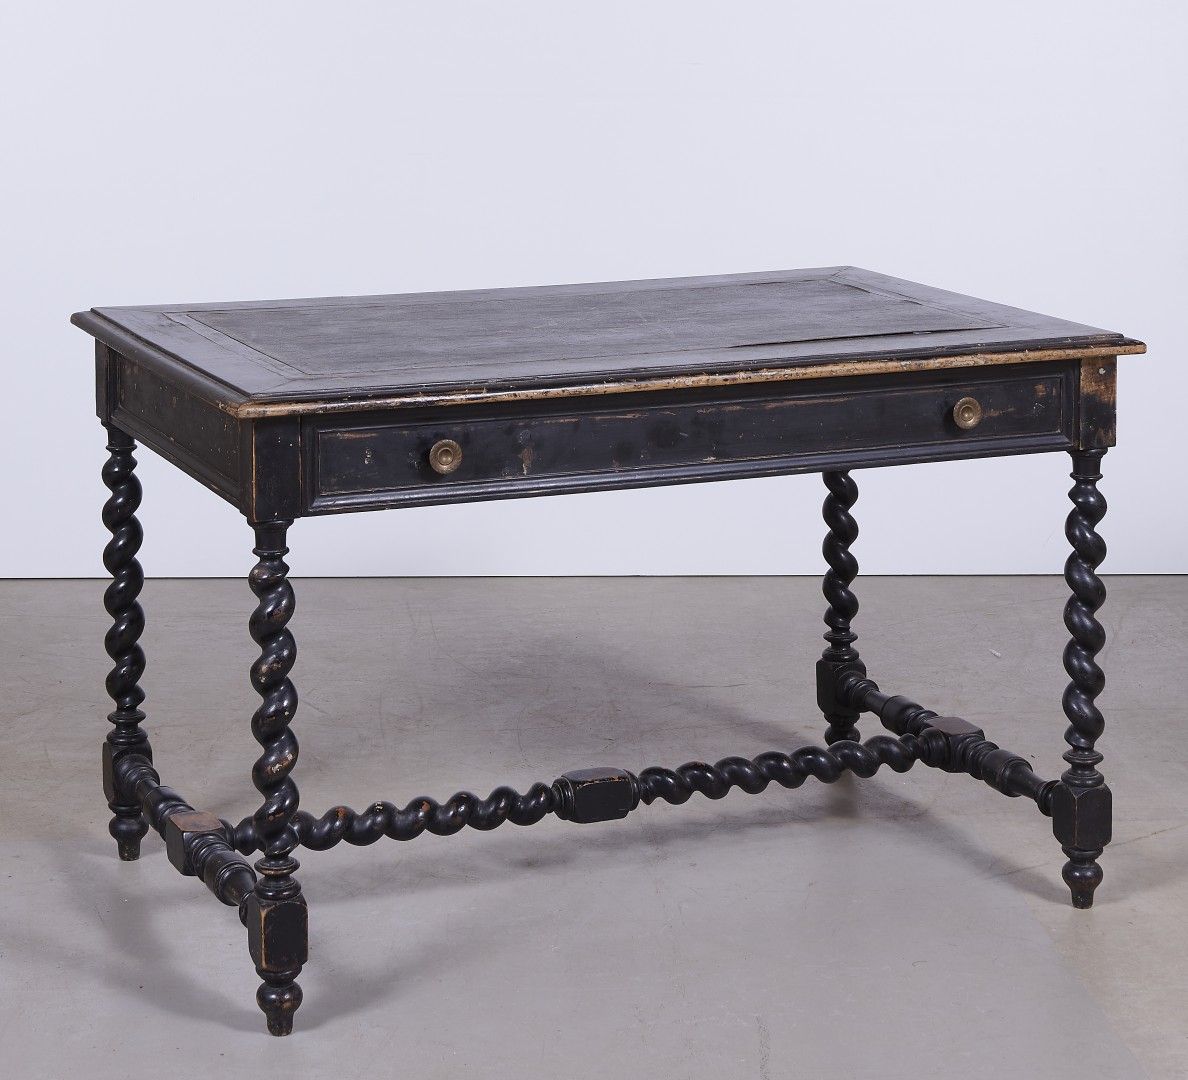 Null 19世纪 桌子 长方形，黑檀木，有线轴腿，顶部有部分镀金的皮革插件。74 x 120 x 76 厘米